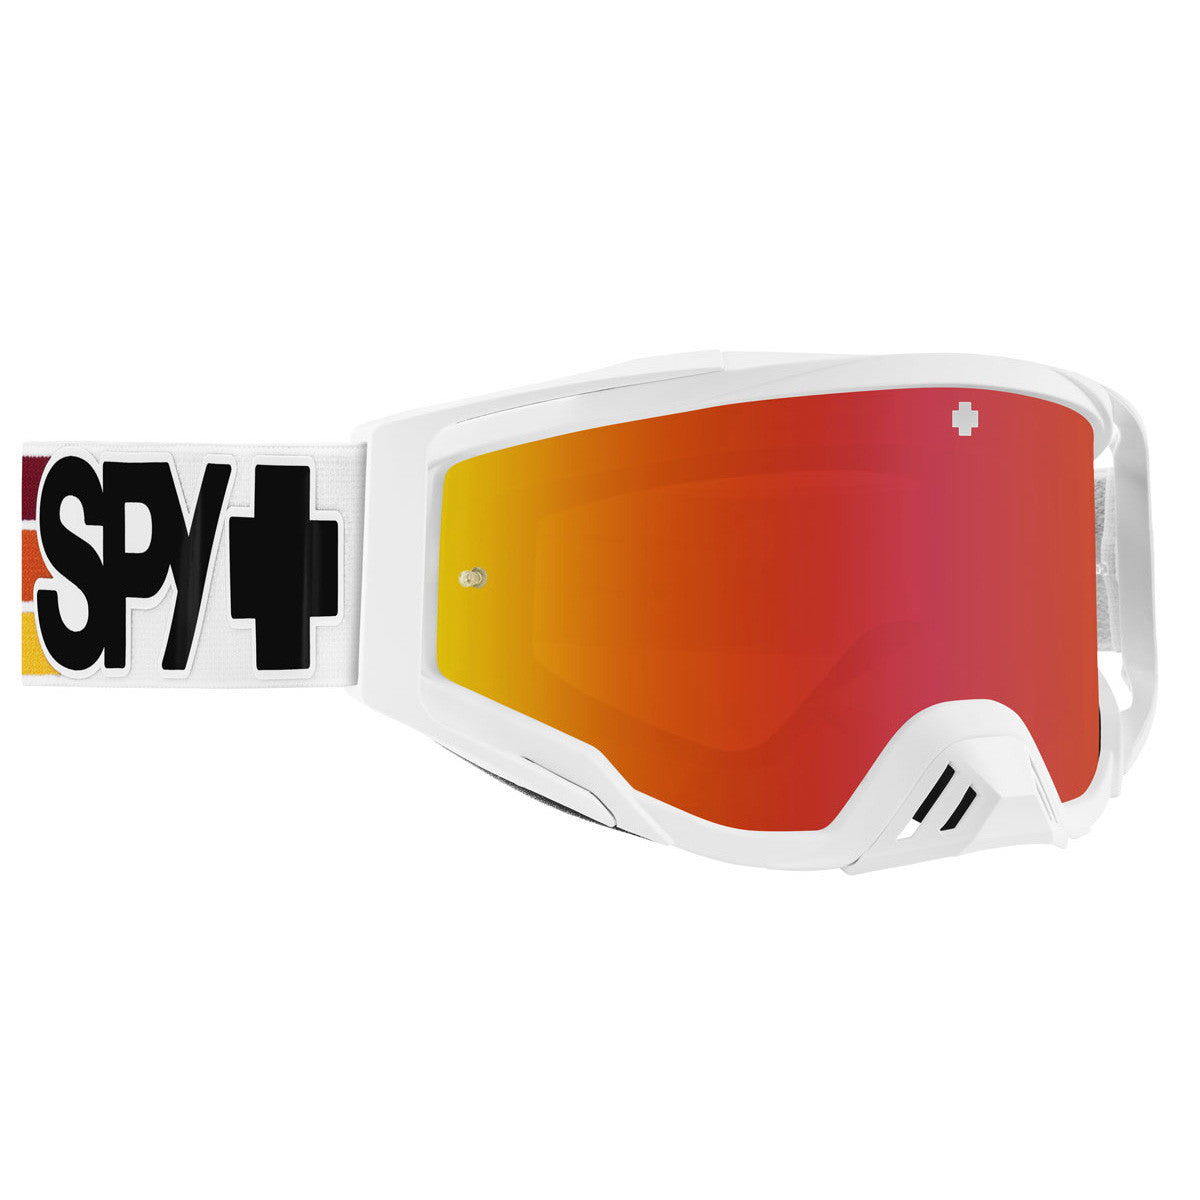 Spy Foundation Plus Goggles  Matte White Large-Extra Large L-XL 57-60